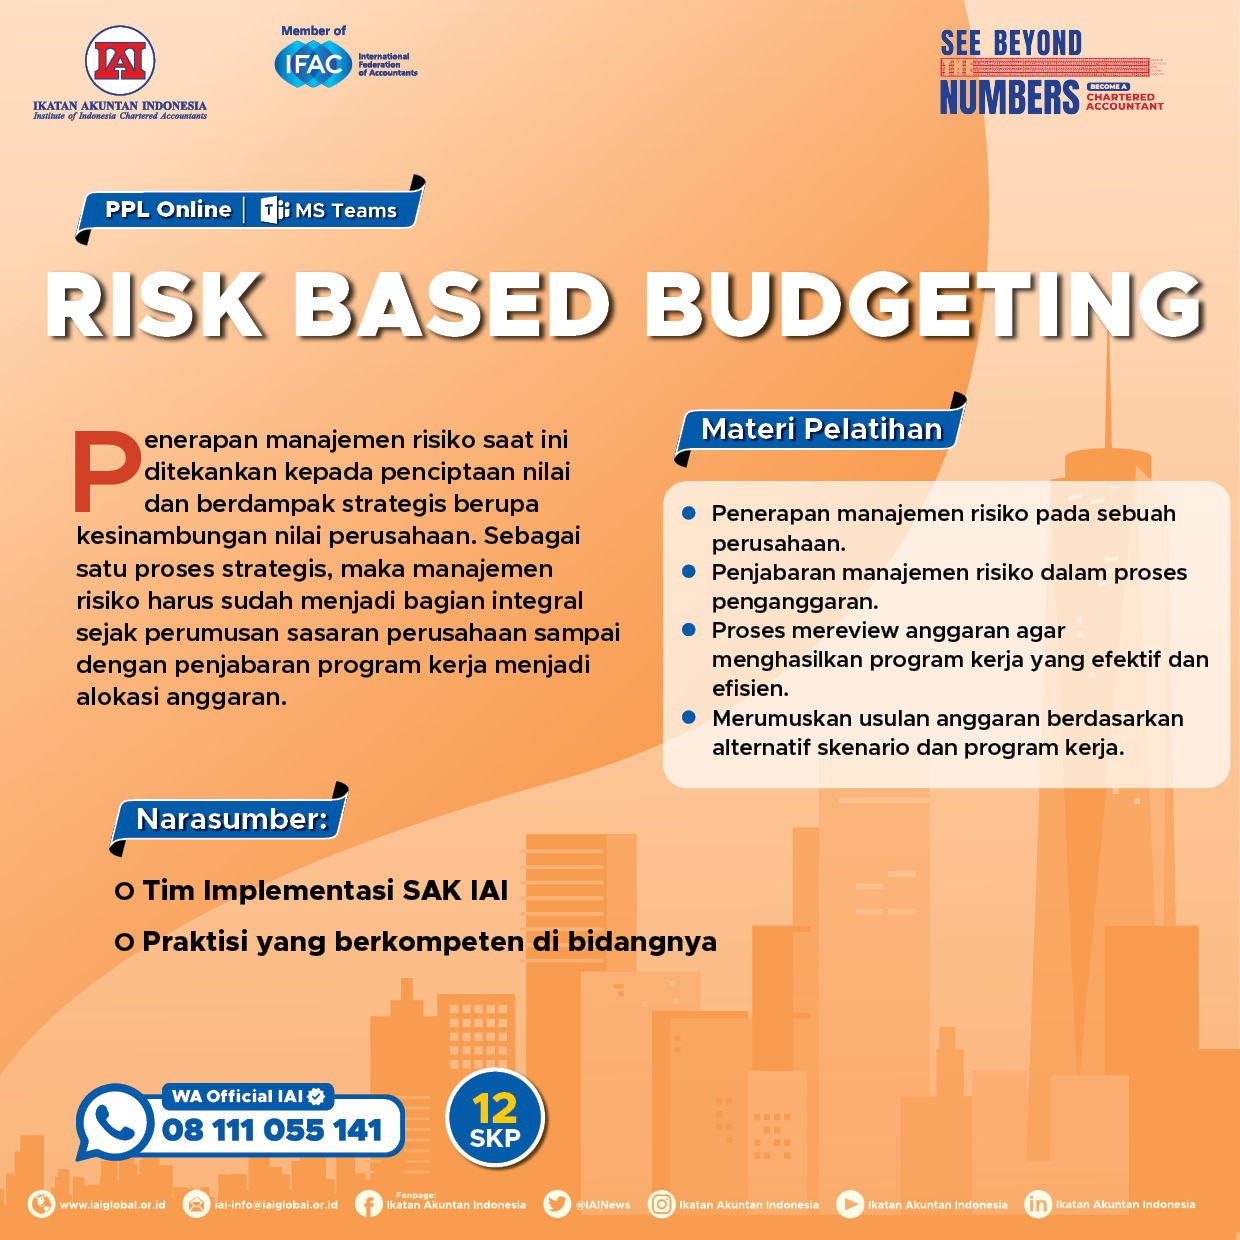 Risk Based Budgeting